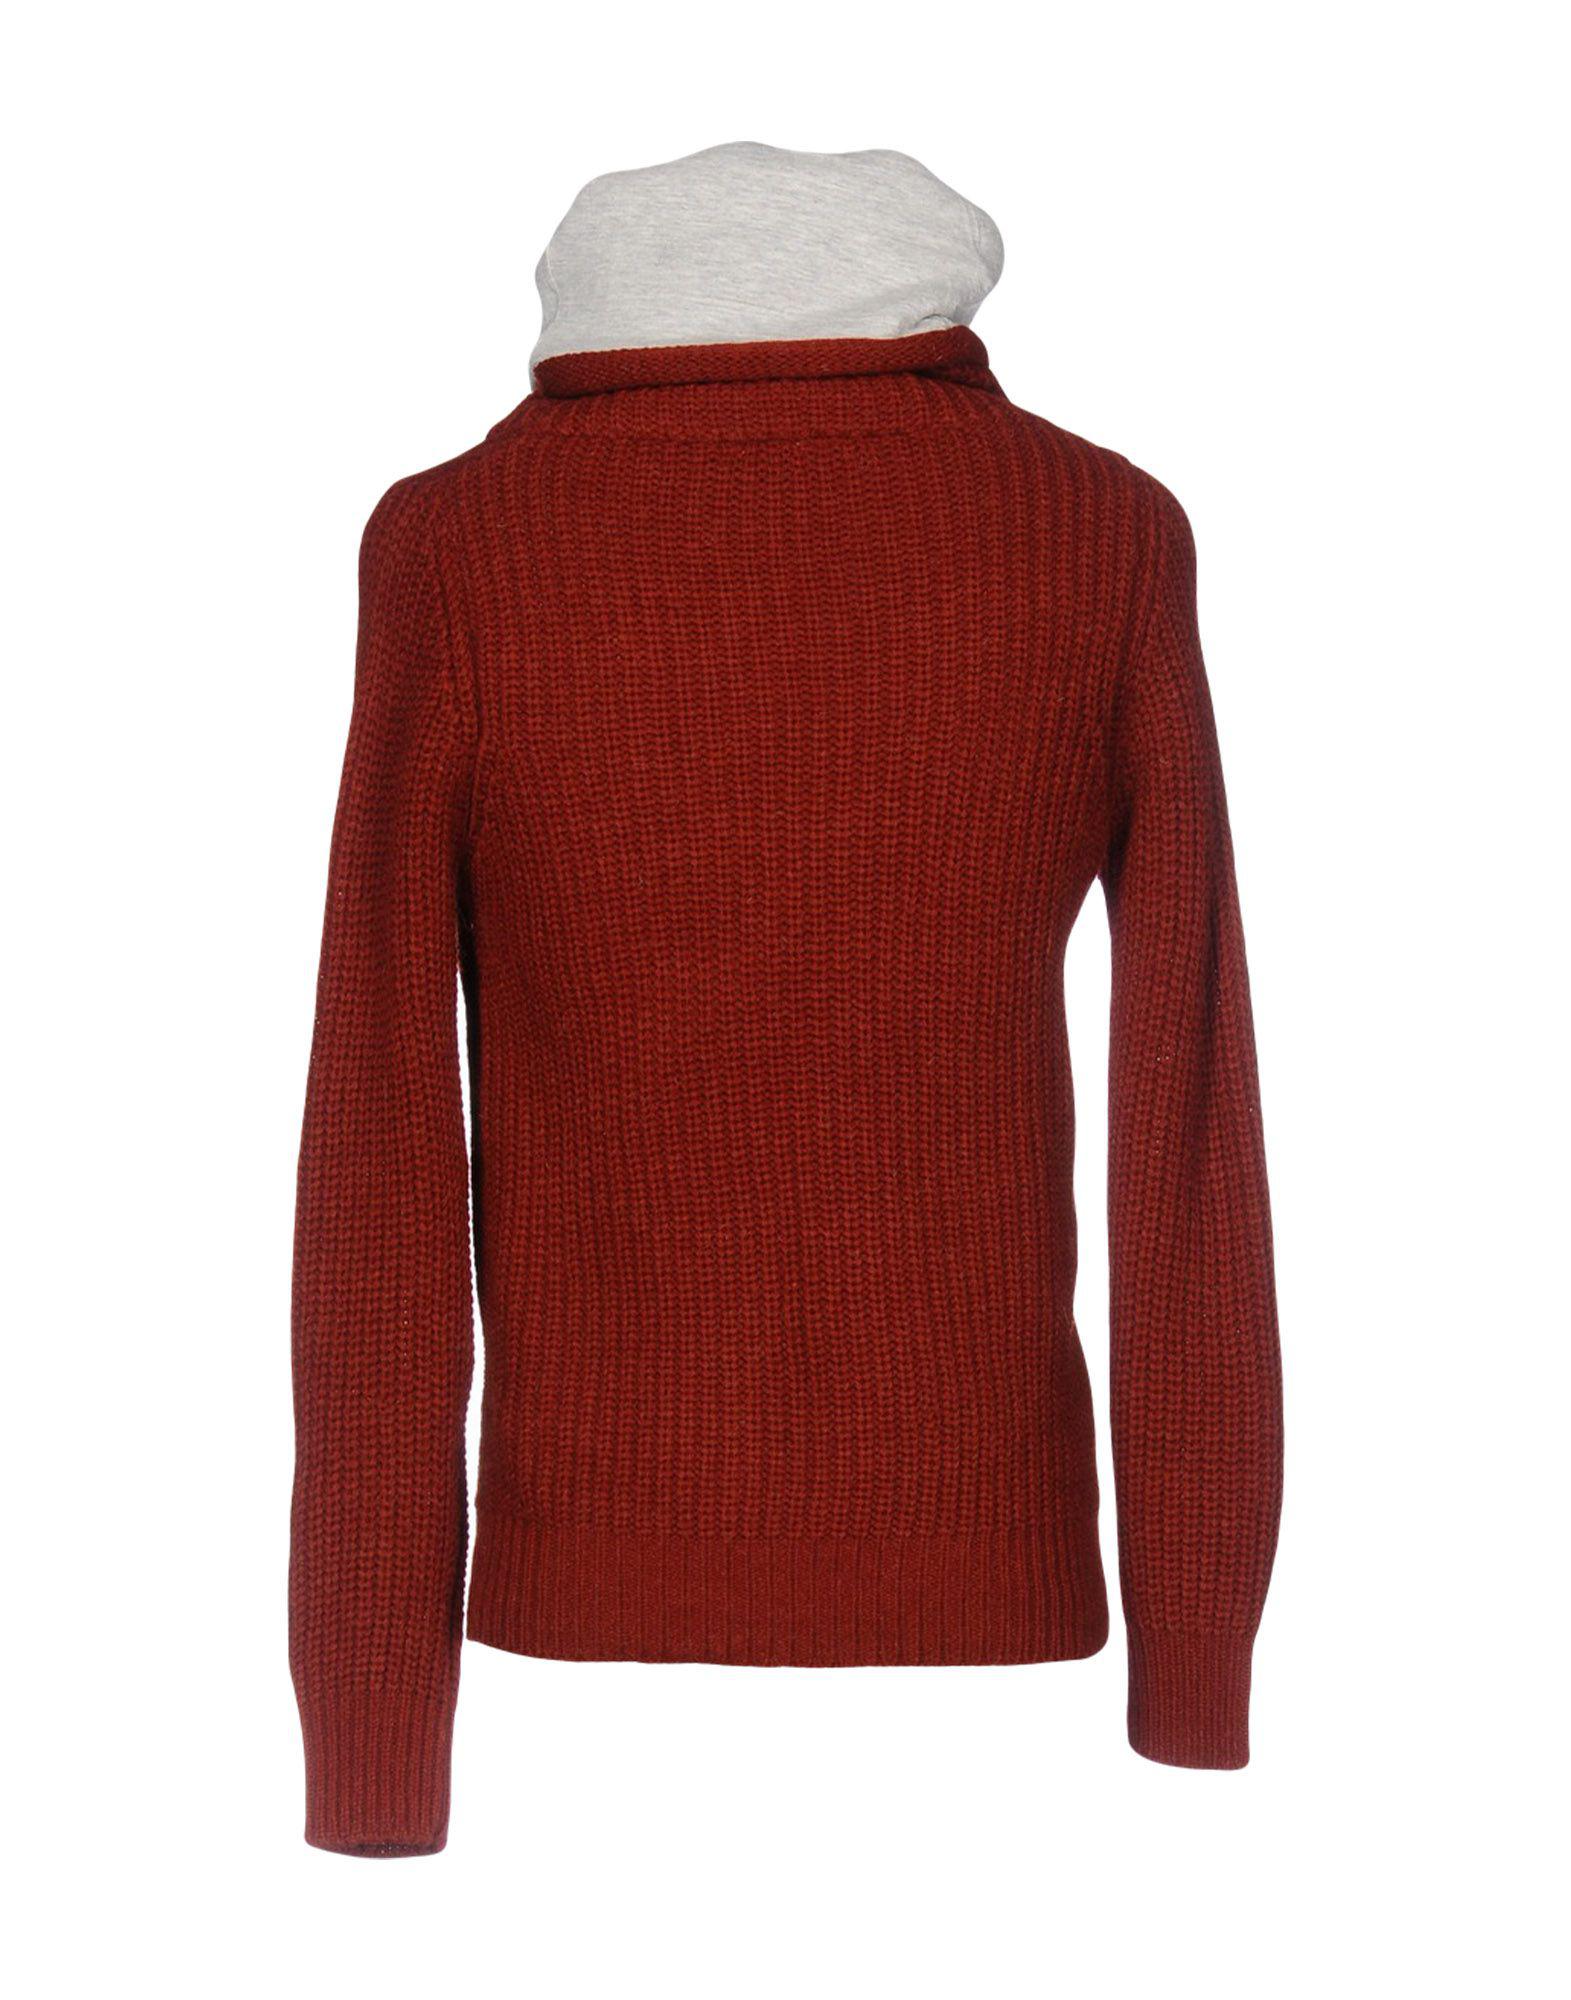 Balmain Wool Turtleneck in Brick Red (Red) for Men - Lyst